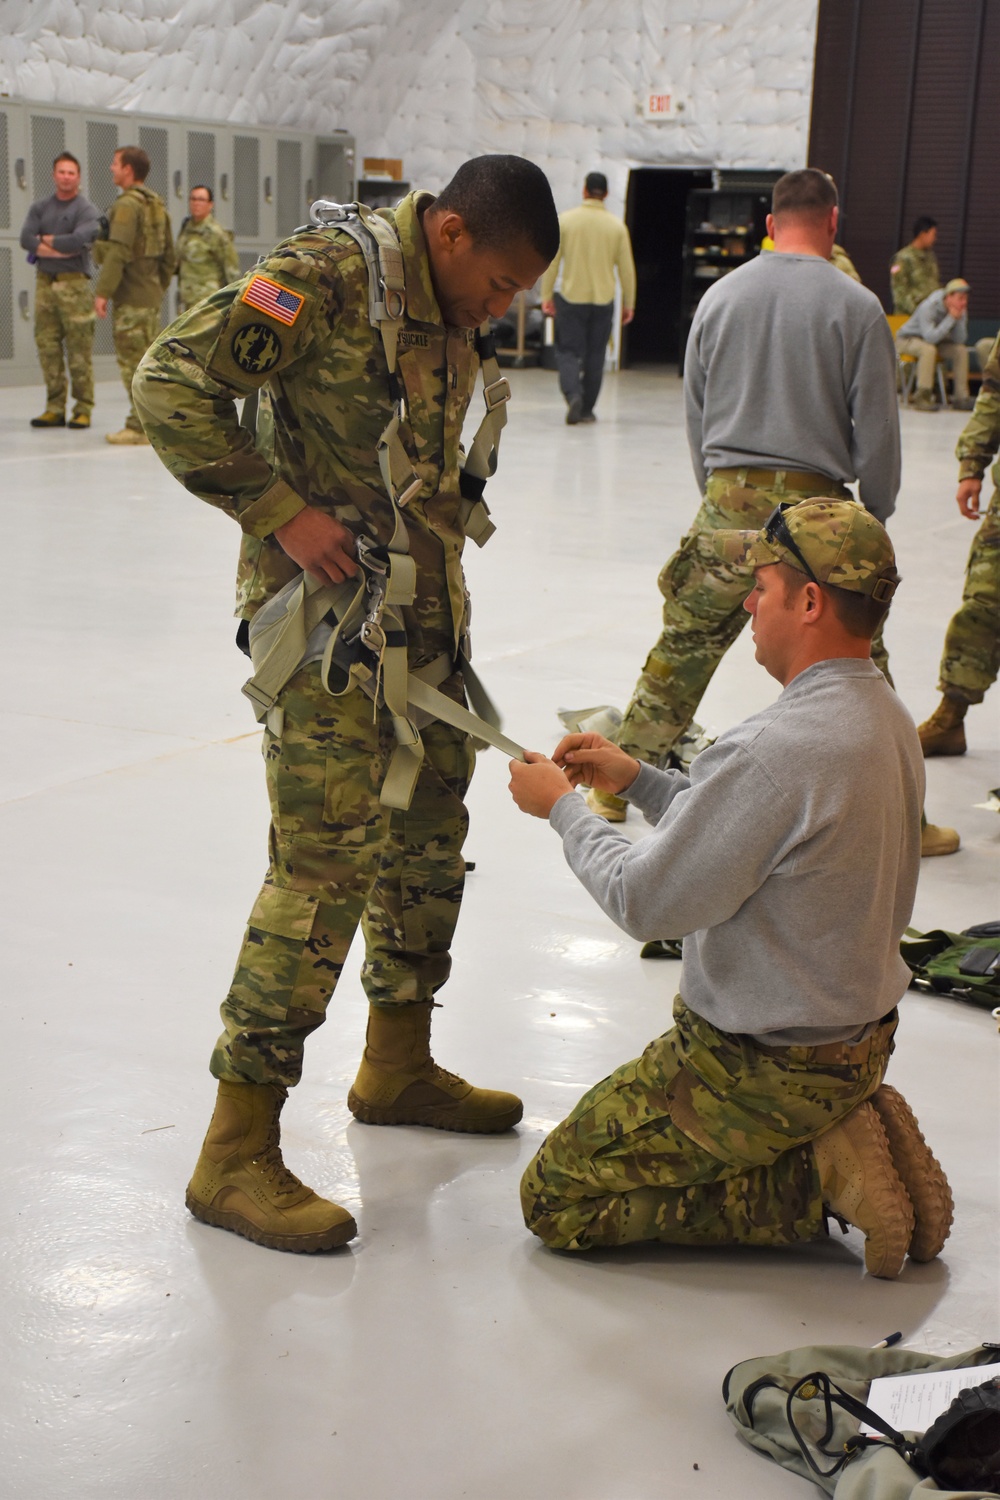 Phoenix recruiting leadership visit Military Freefall School in Yuma